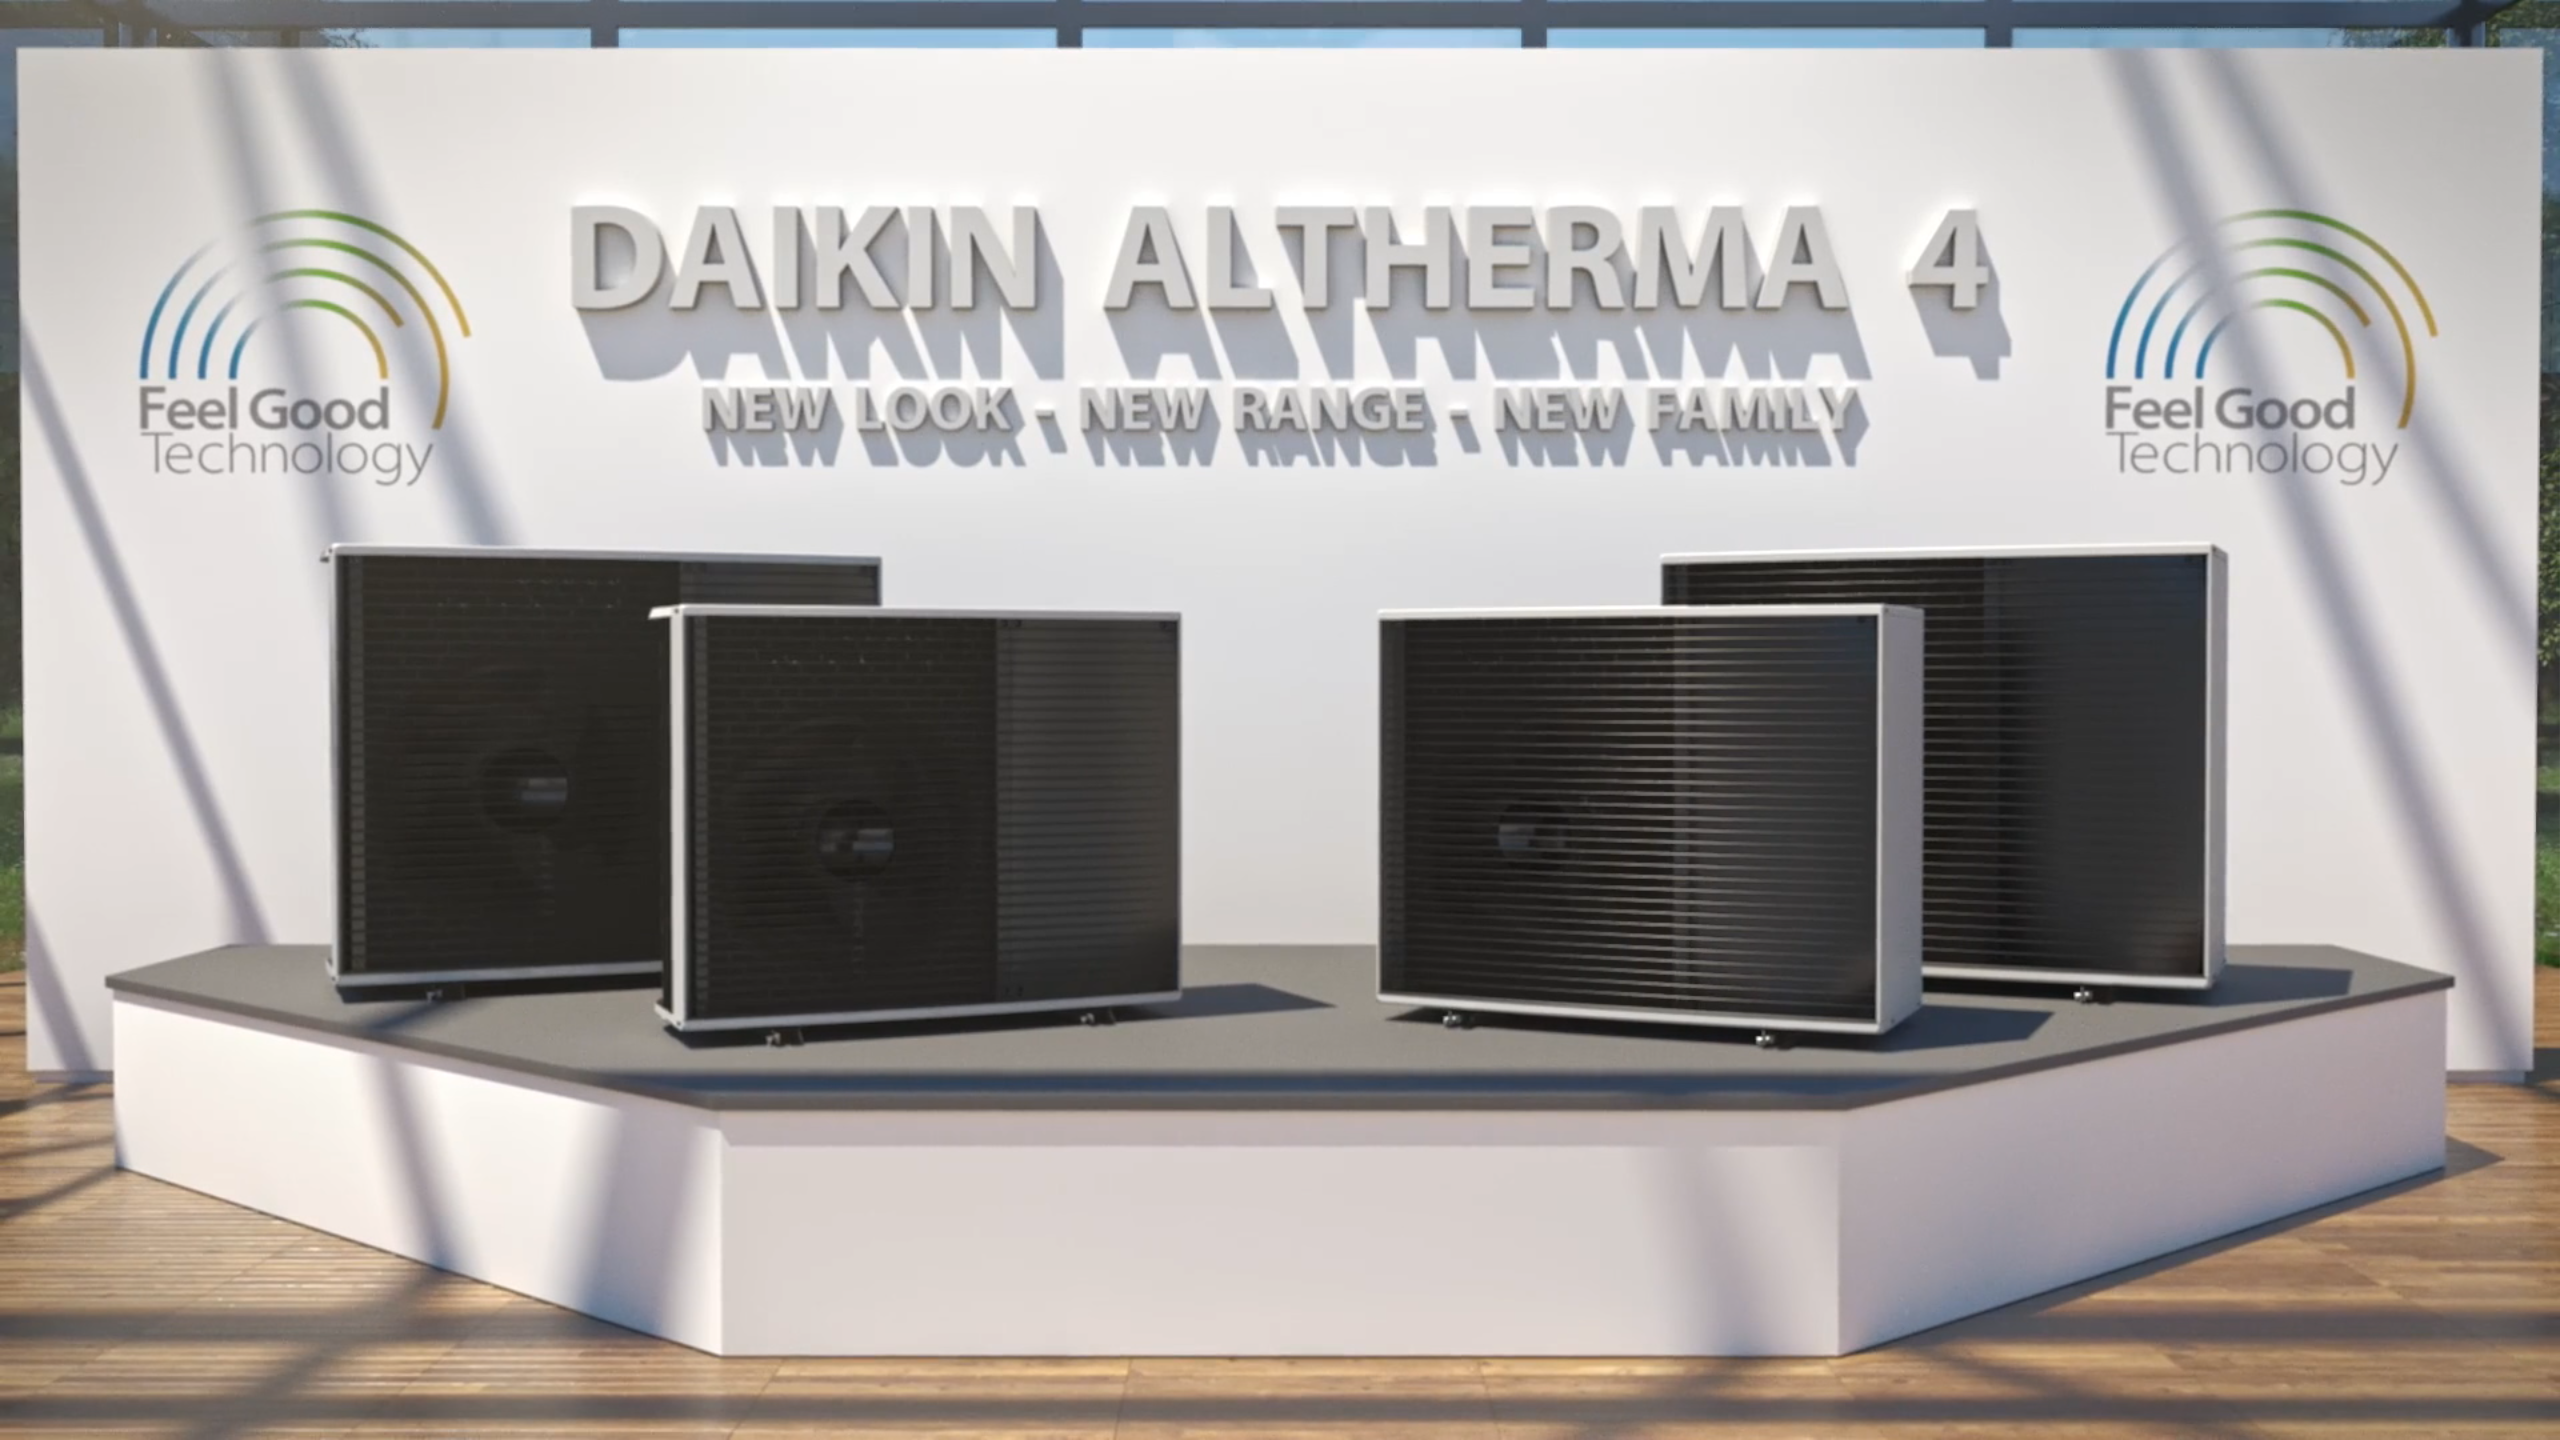 Daikin Altherma 4 - New Look - New Range - New Family